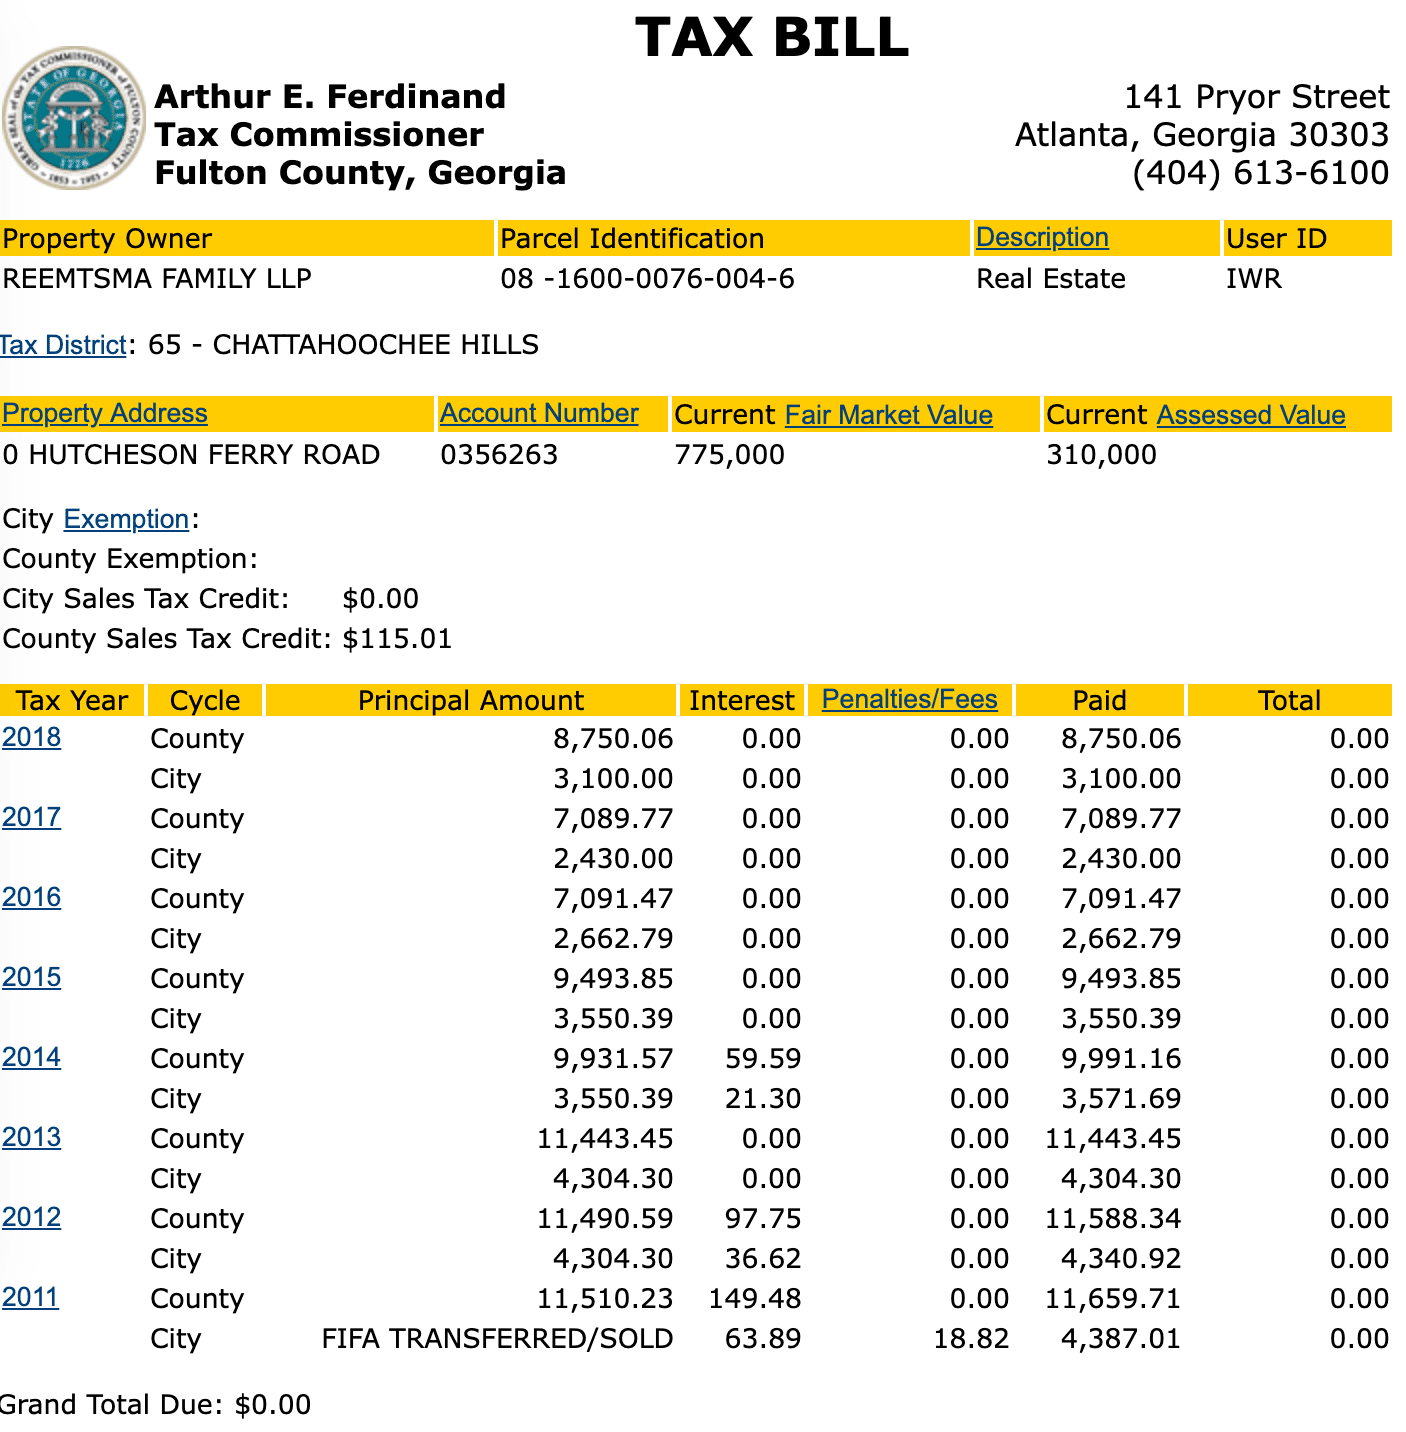 Arthur Ferdinand -Neighbor tax bill https://www.johnscreekpost.com